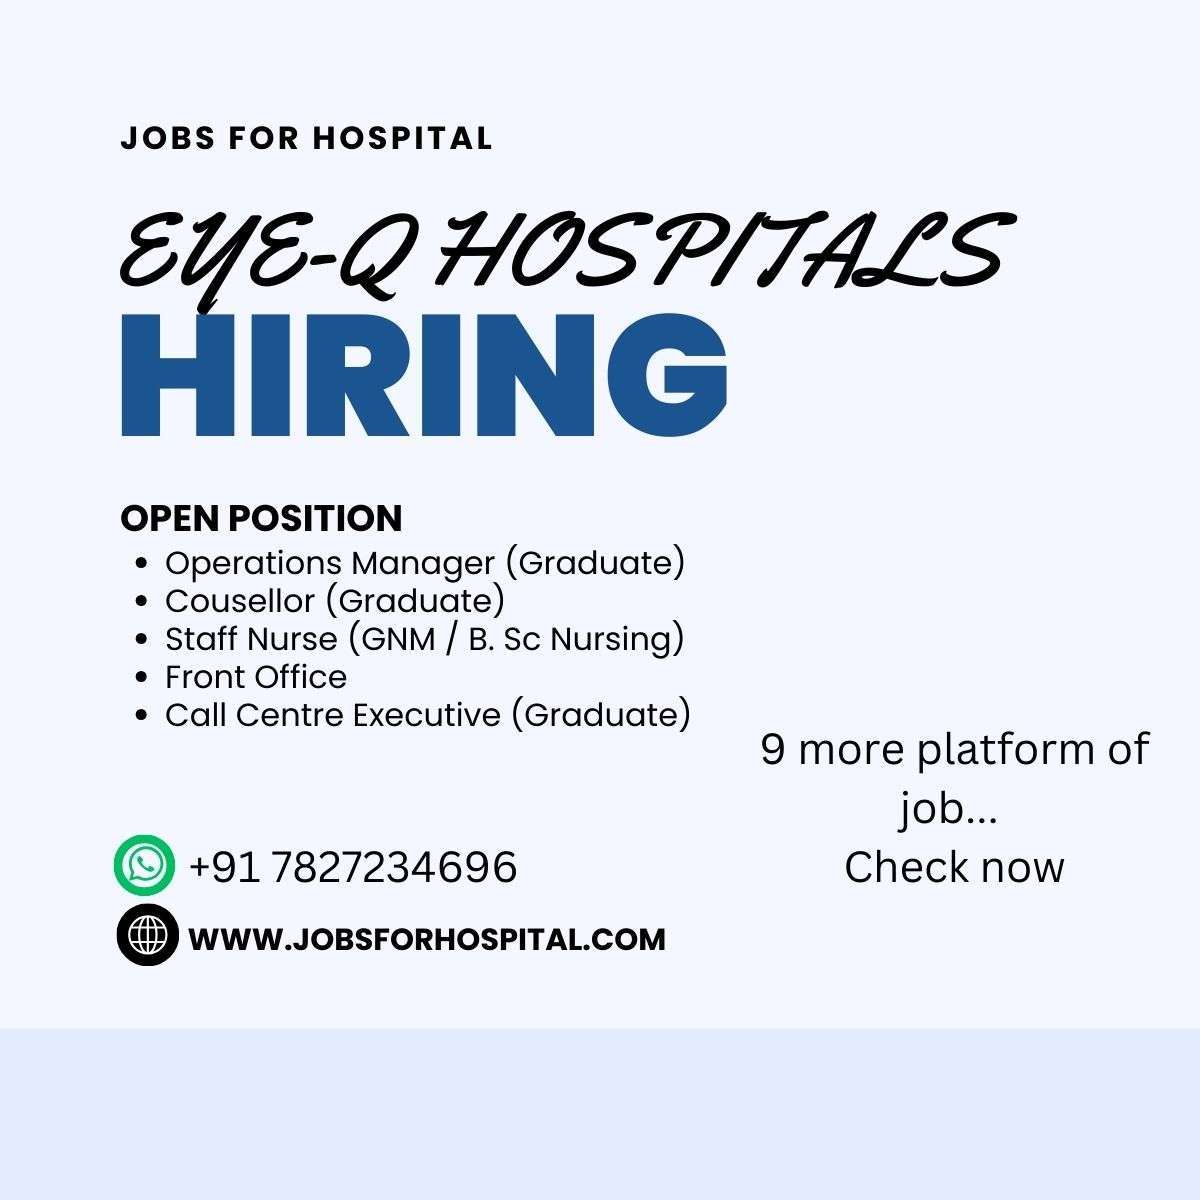 Eye hospitals hiring... jobs for hospita